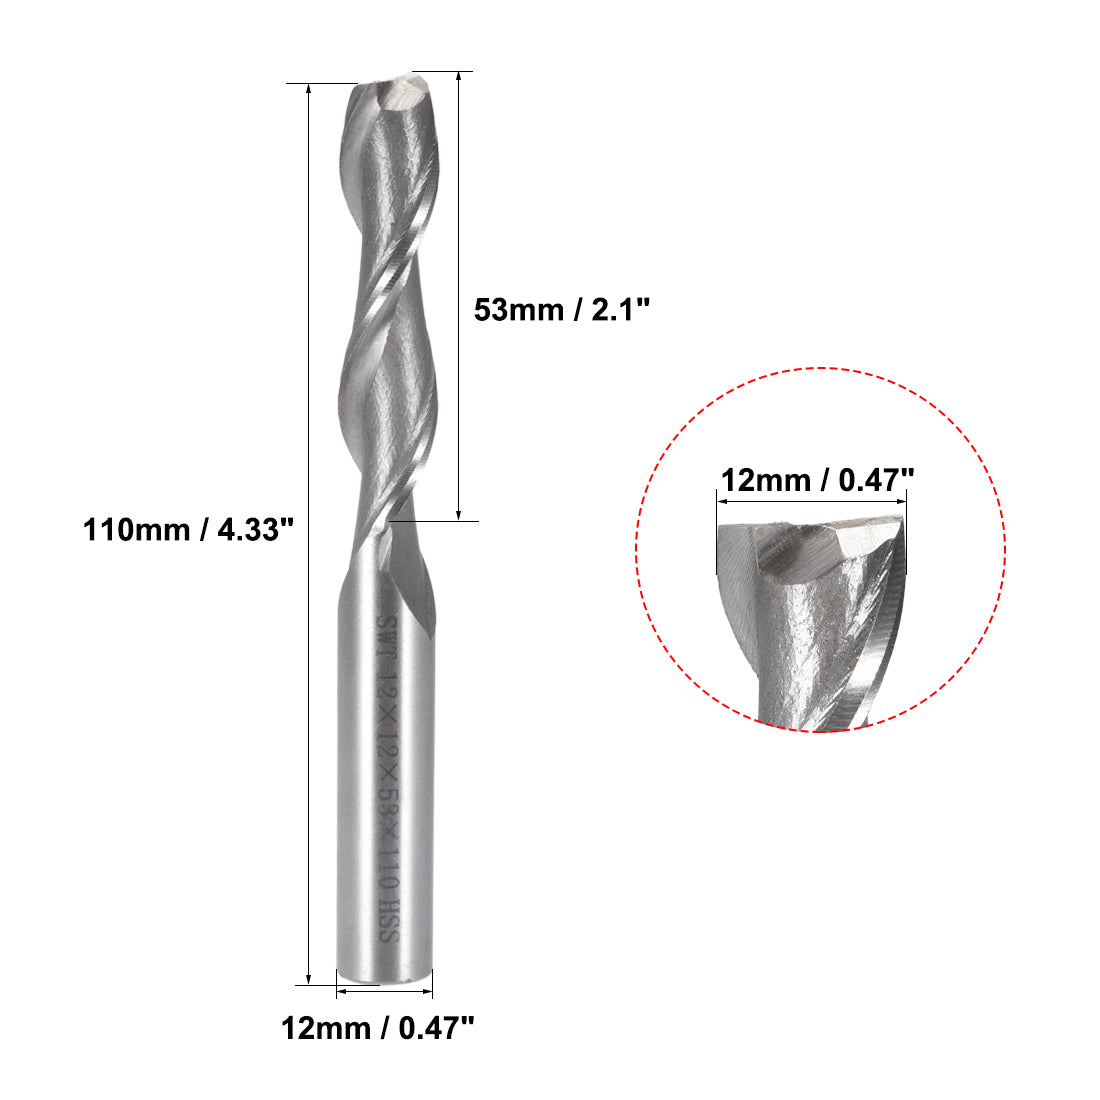 uxcell Uxcell 12mm Cutting HSSAL Spiral Drill Bit Straight End Mill Cutter 2 Flute with 12mm Shank